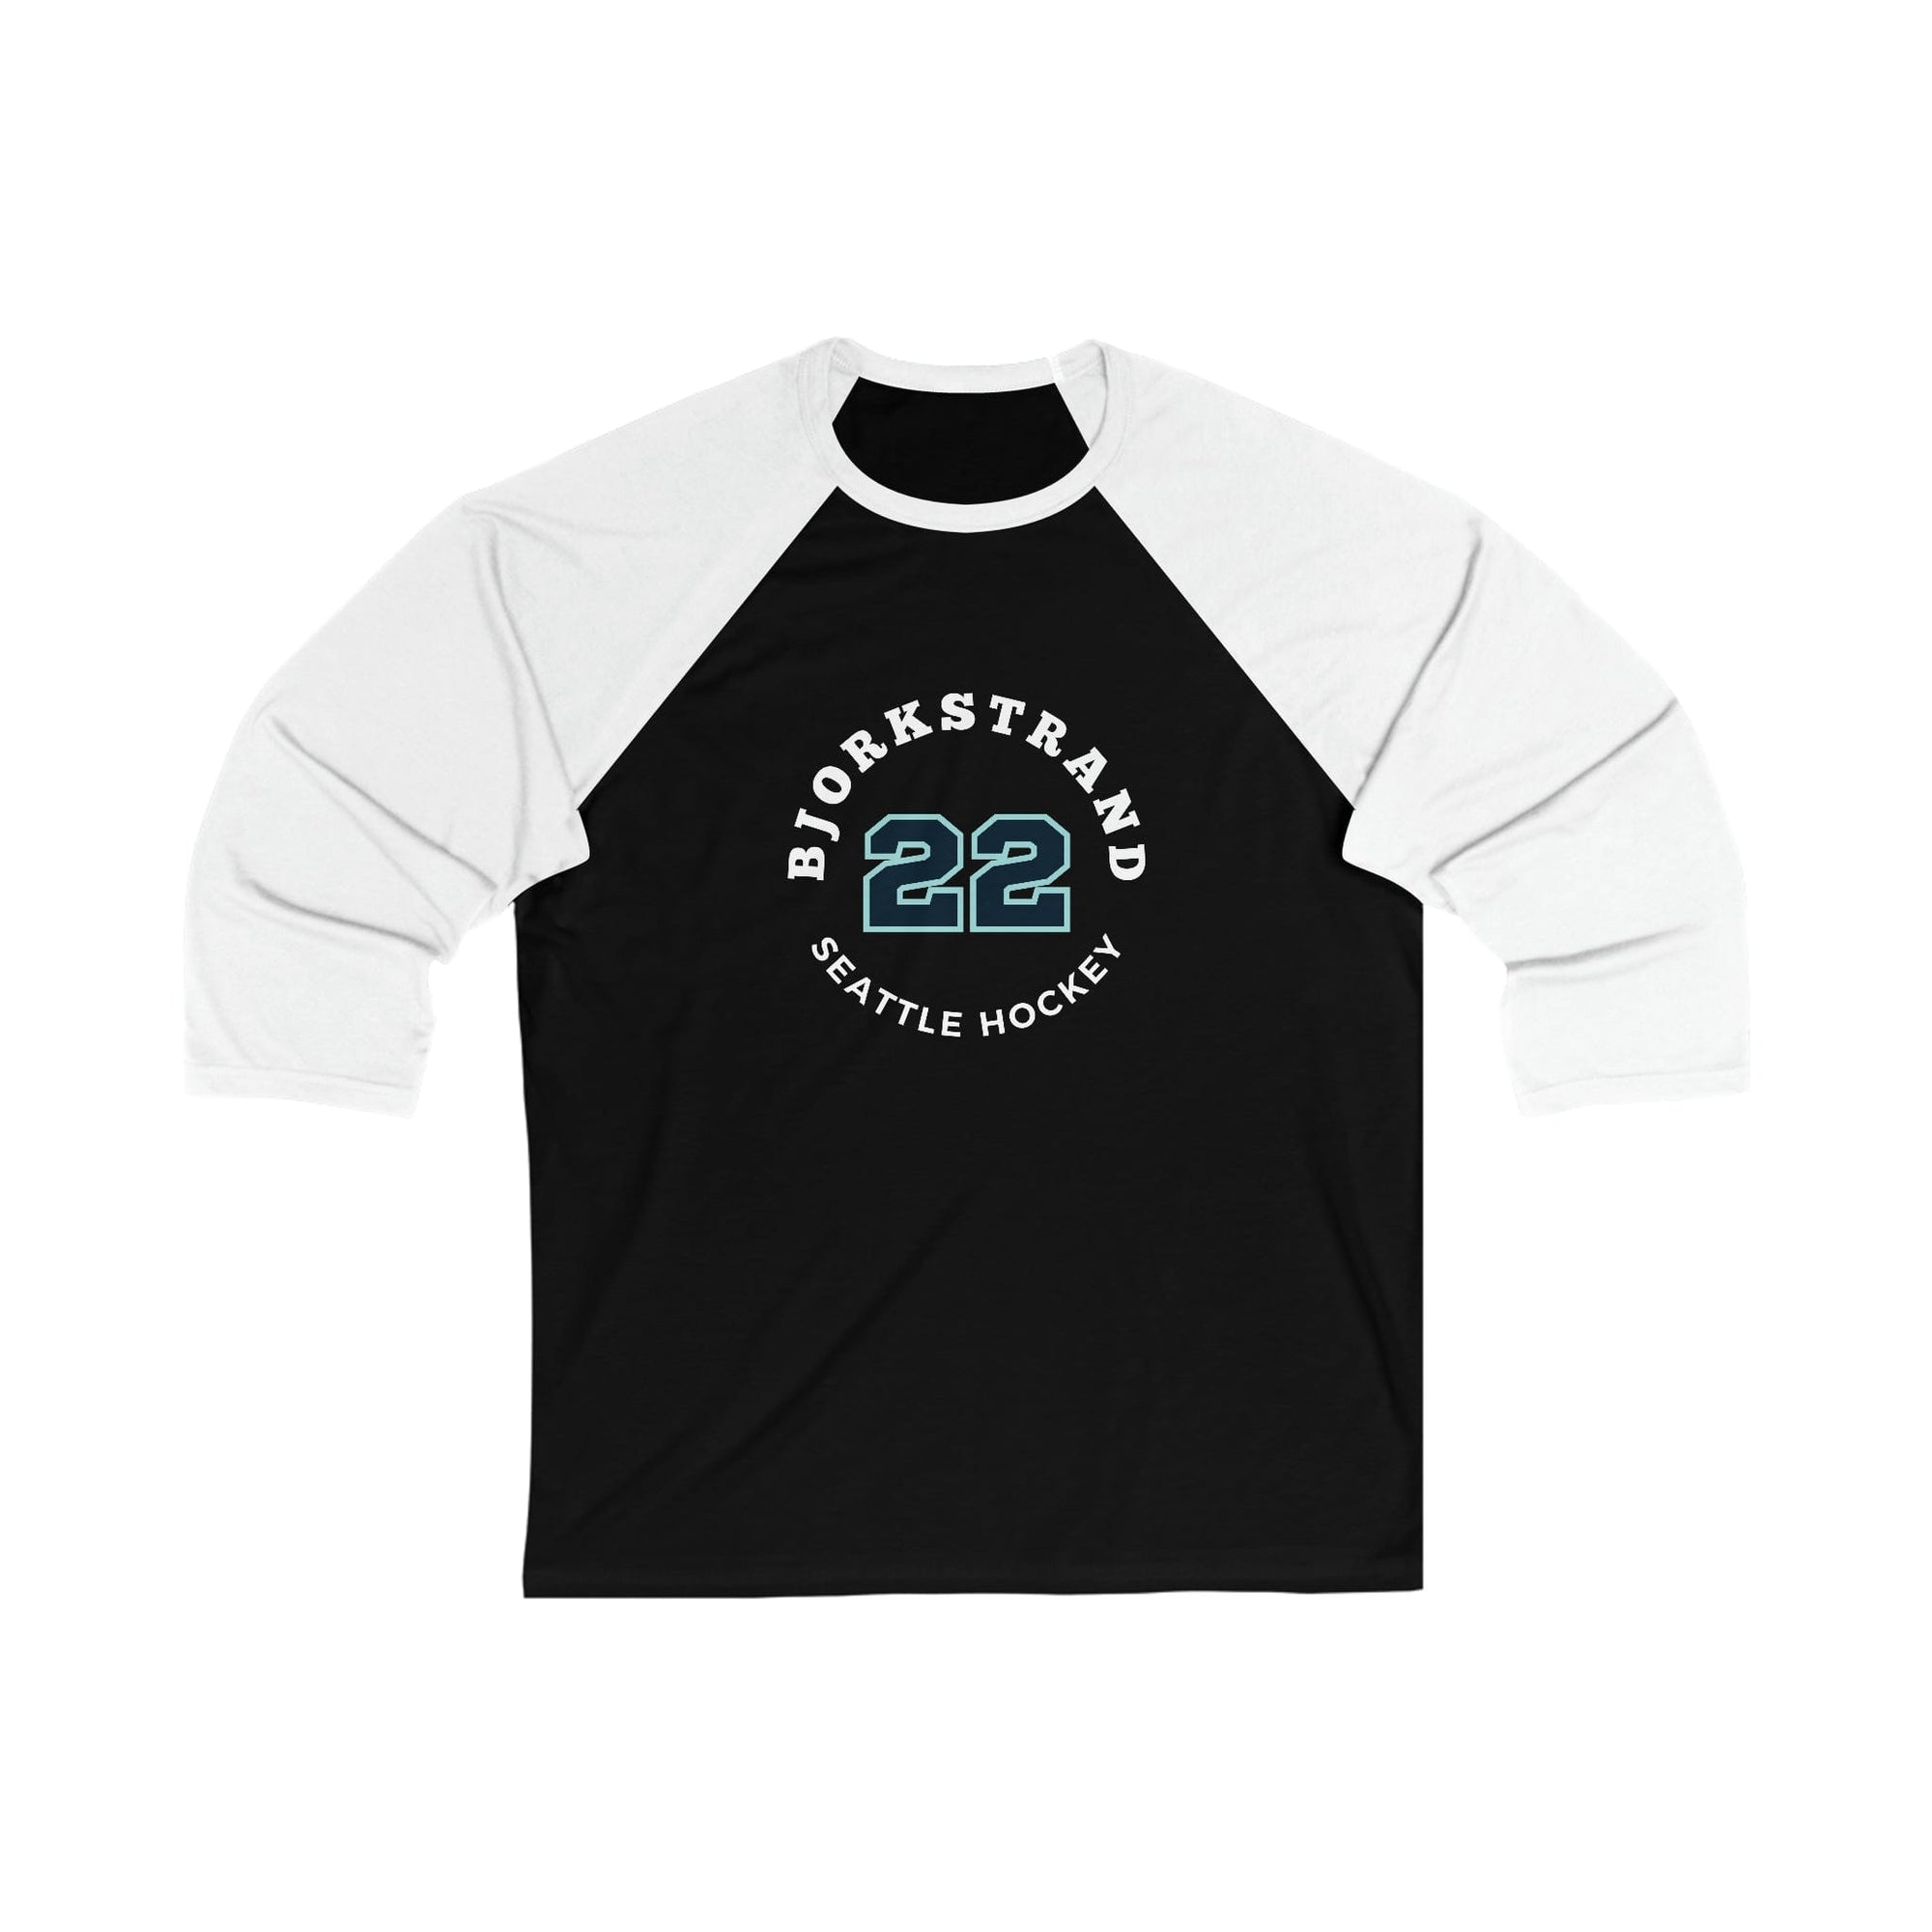 Long-sleeve Bjorkstrand 22 Seattle Hockey Number Arch Design Unisex Tri-Blend 3/4 Sleeve Raglan Baseball Shirt